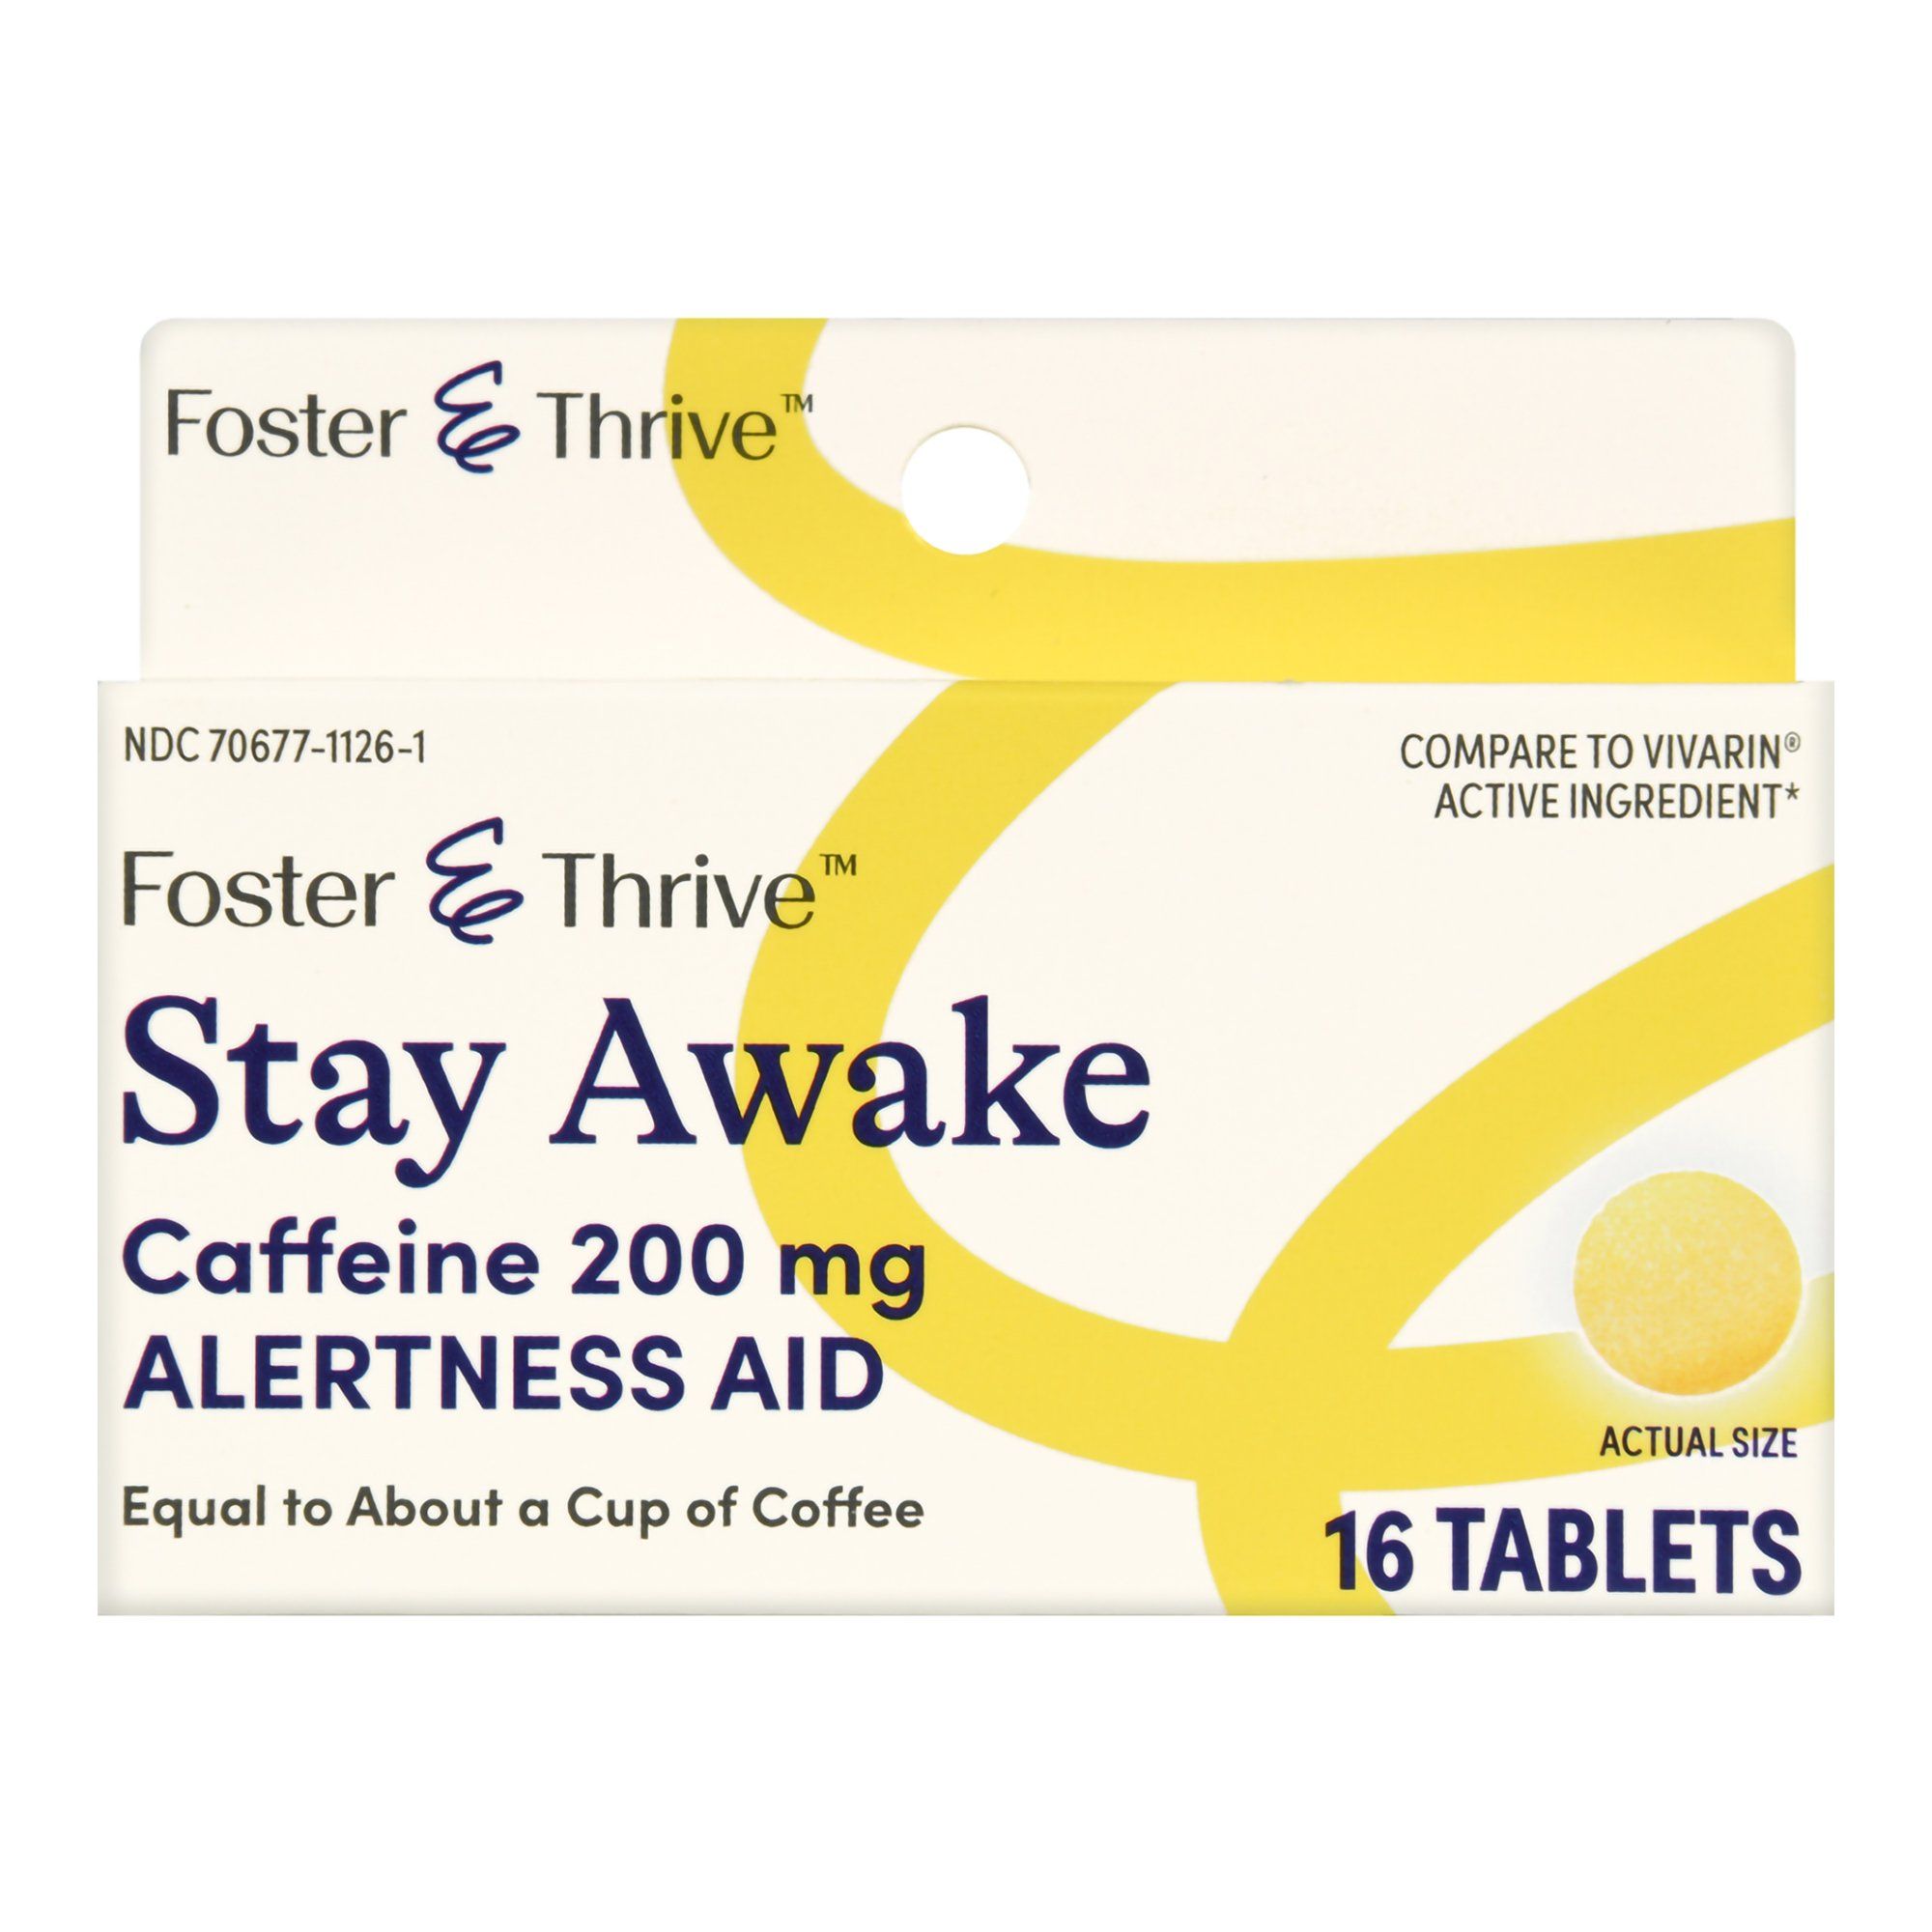 Foster & Thrive Stay Awake Caffeine Tablets, 200 mg - 16 ct